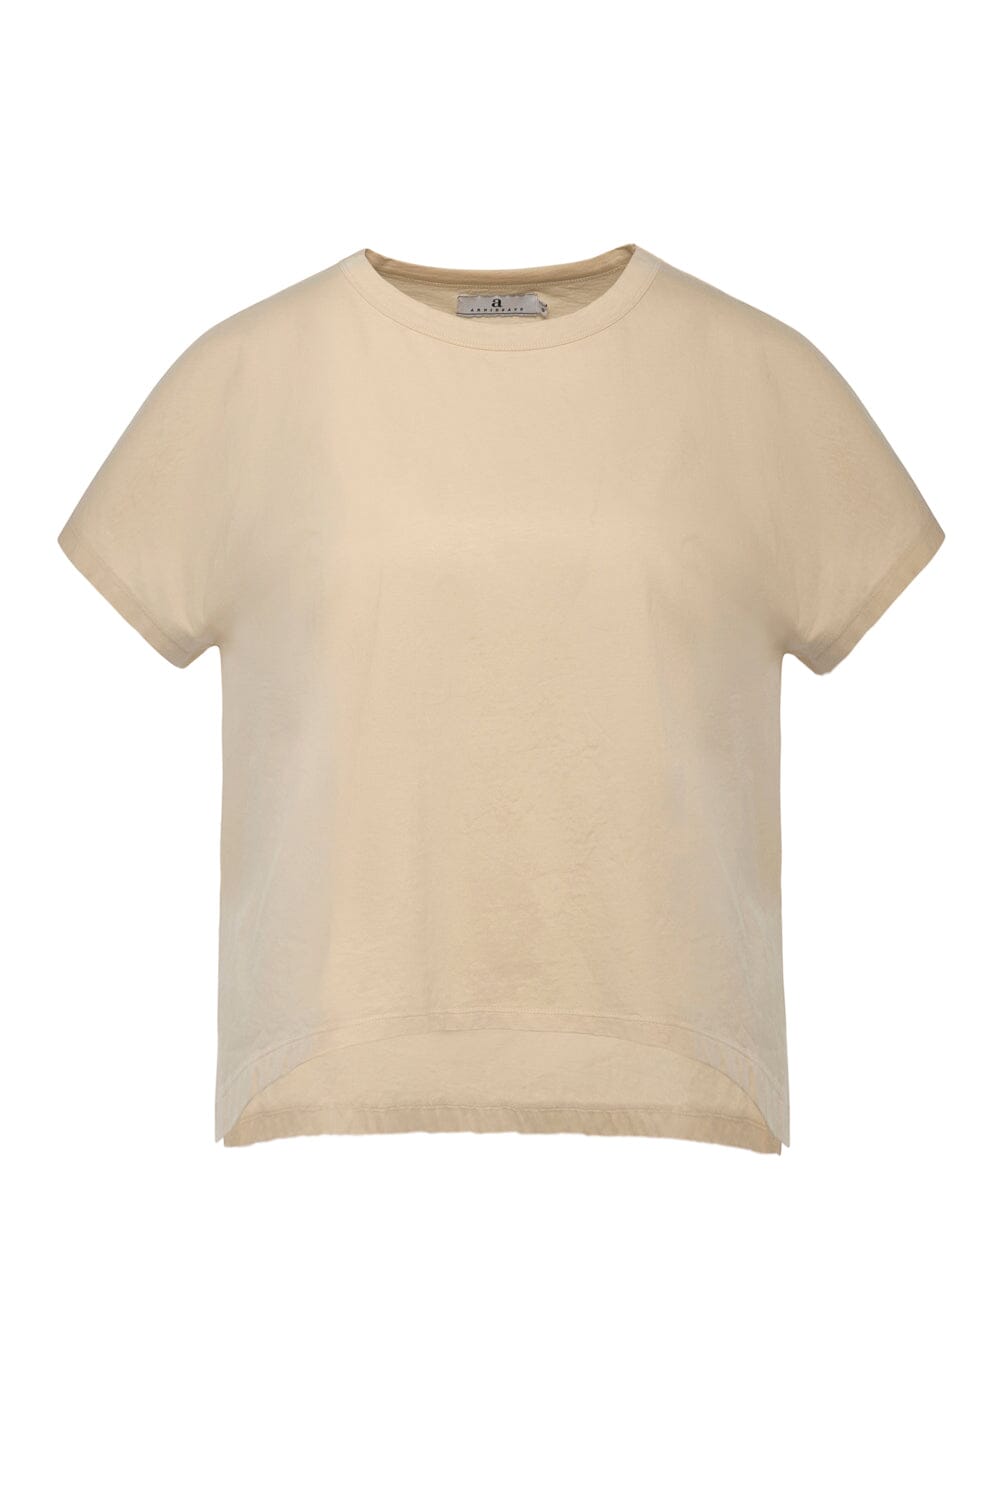 ArnieSays: Jace Cotton Sand T-shirt